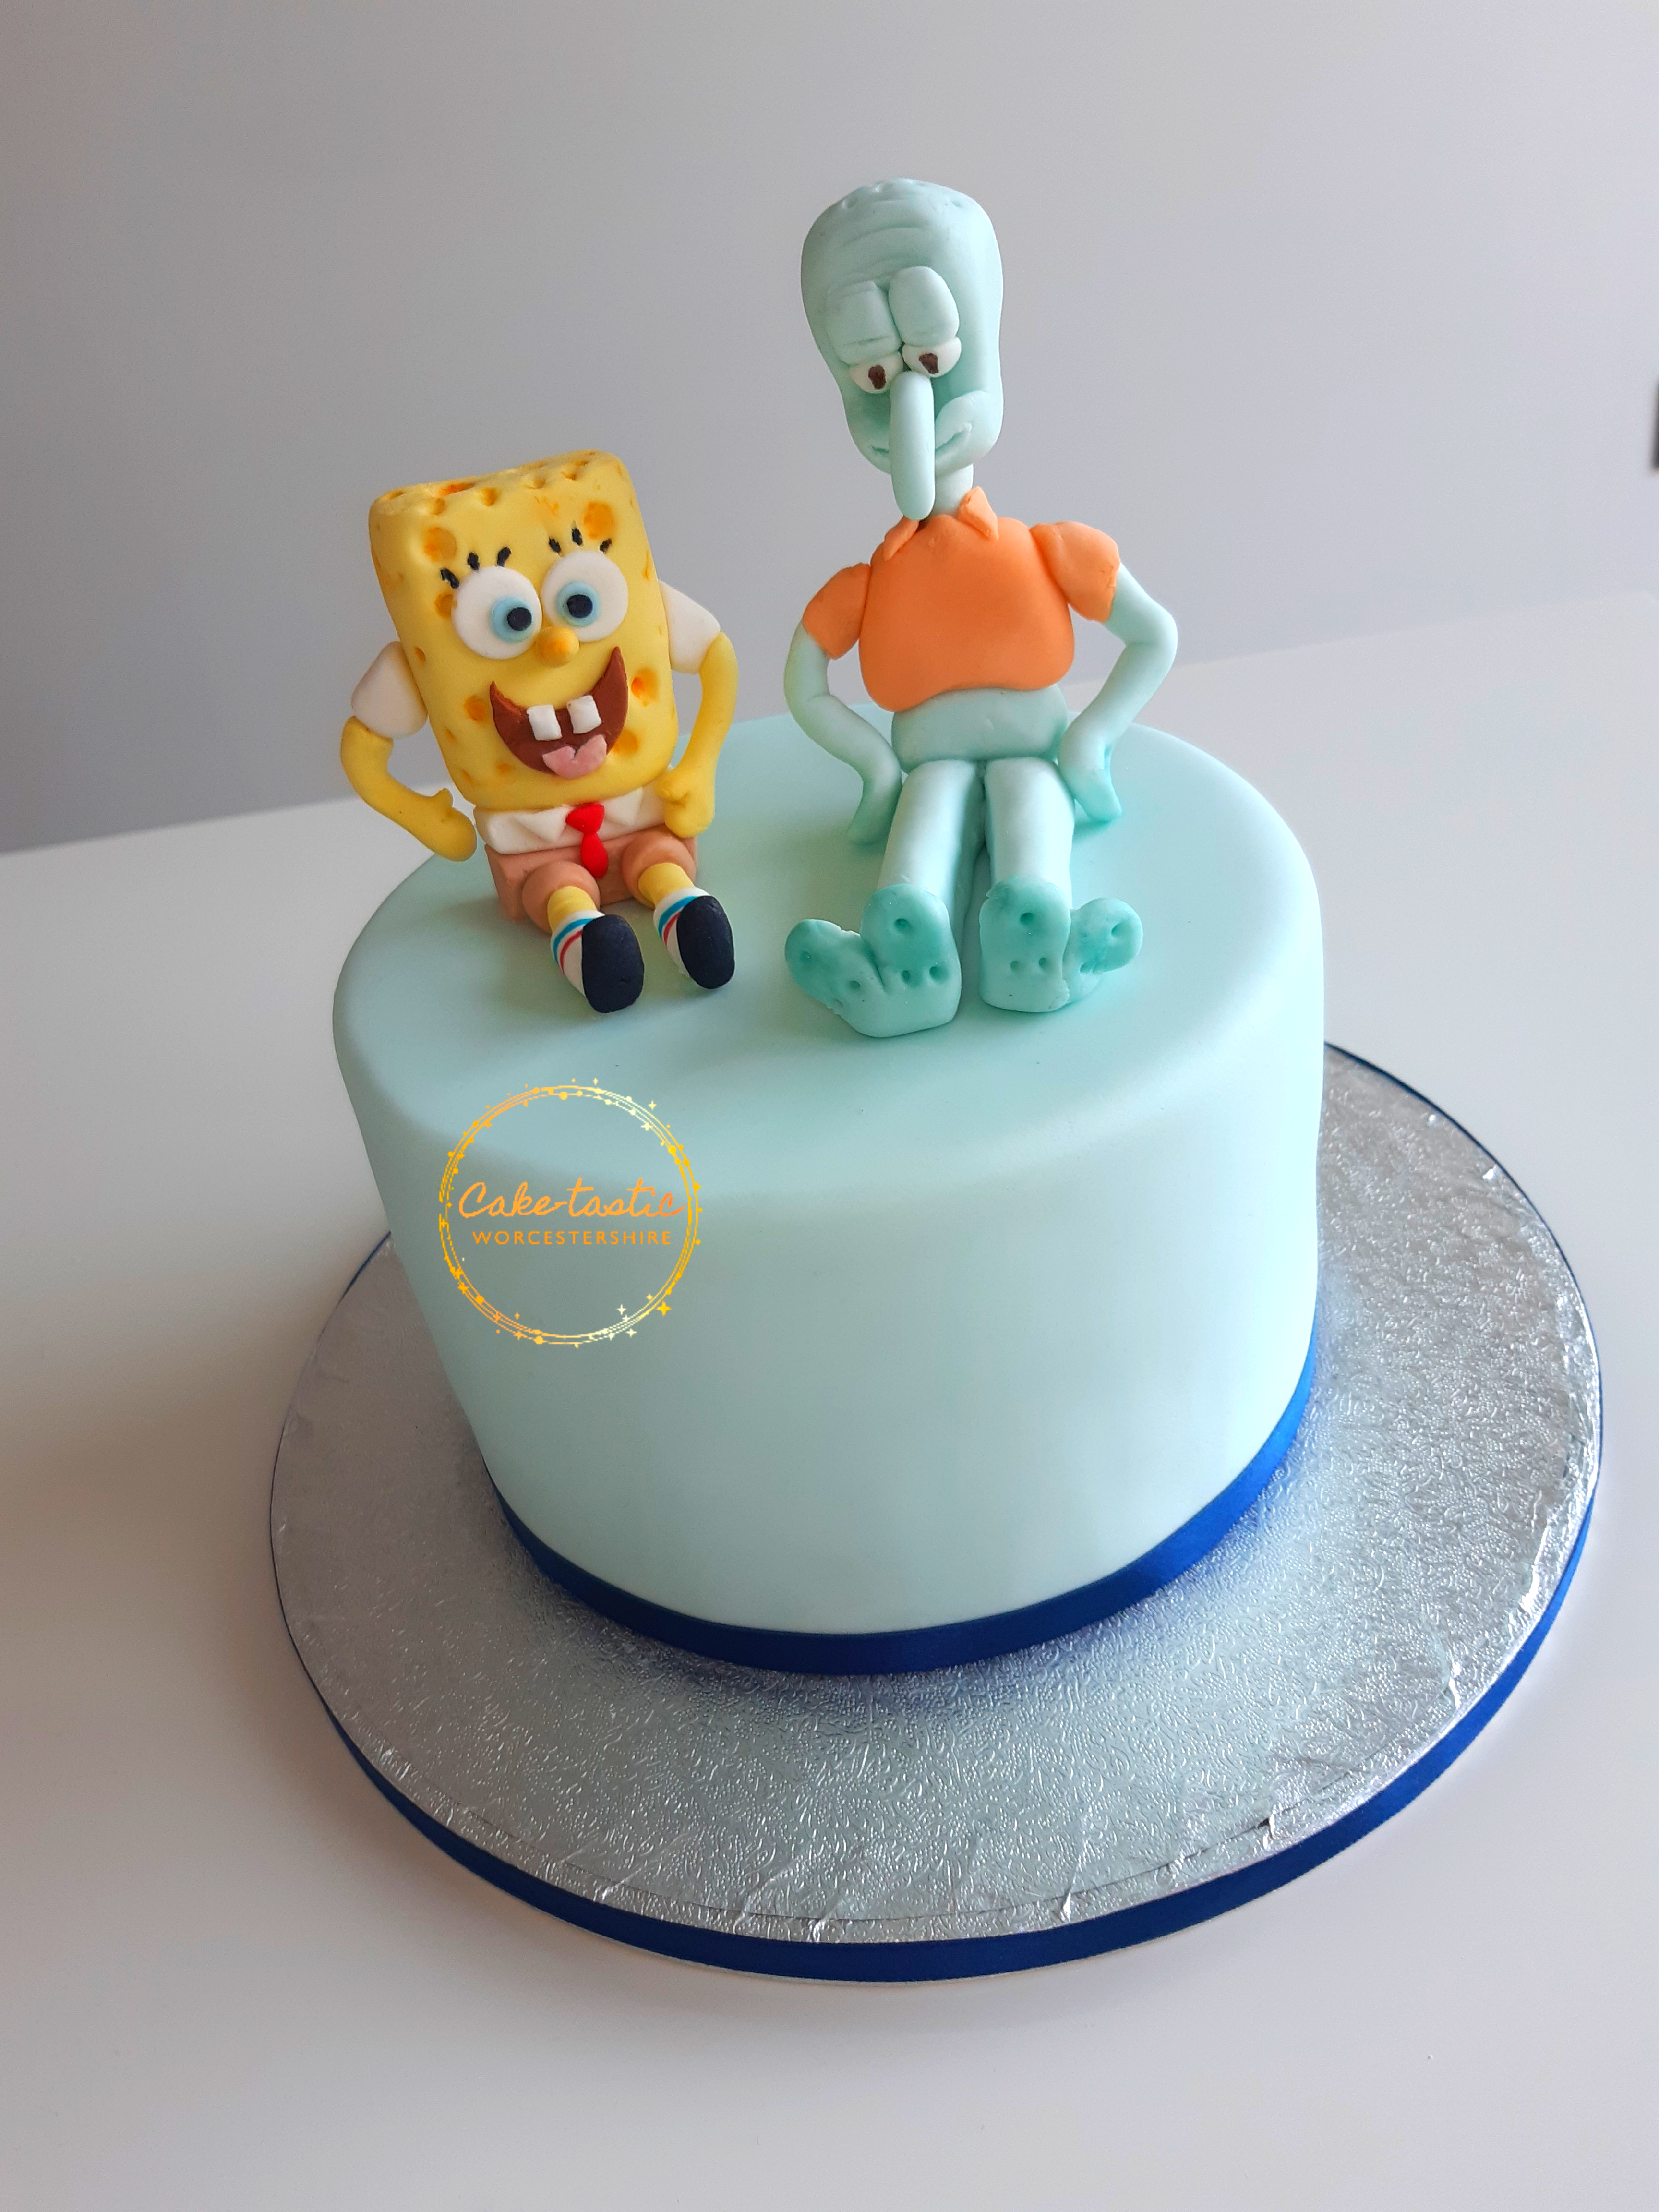 Spongebob and Squidward |Cake